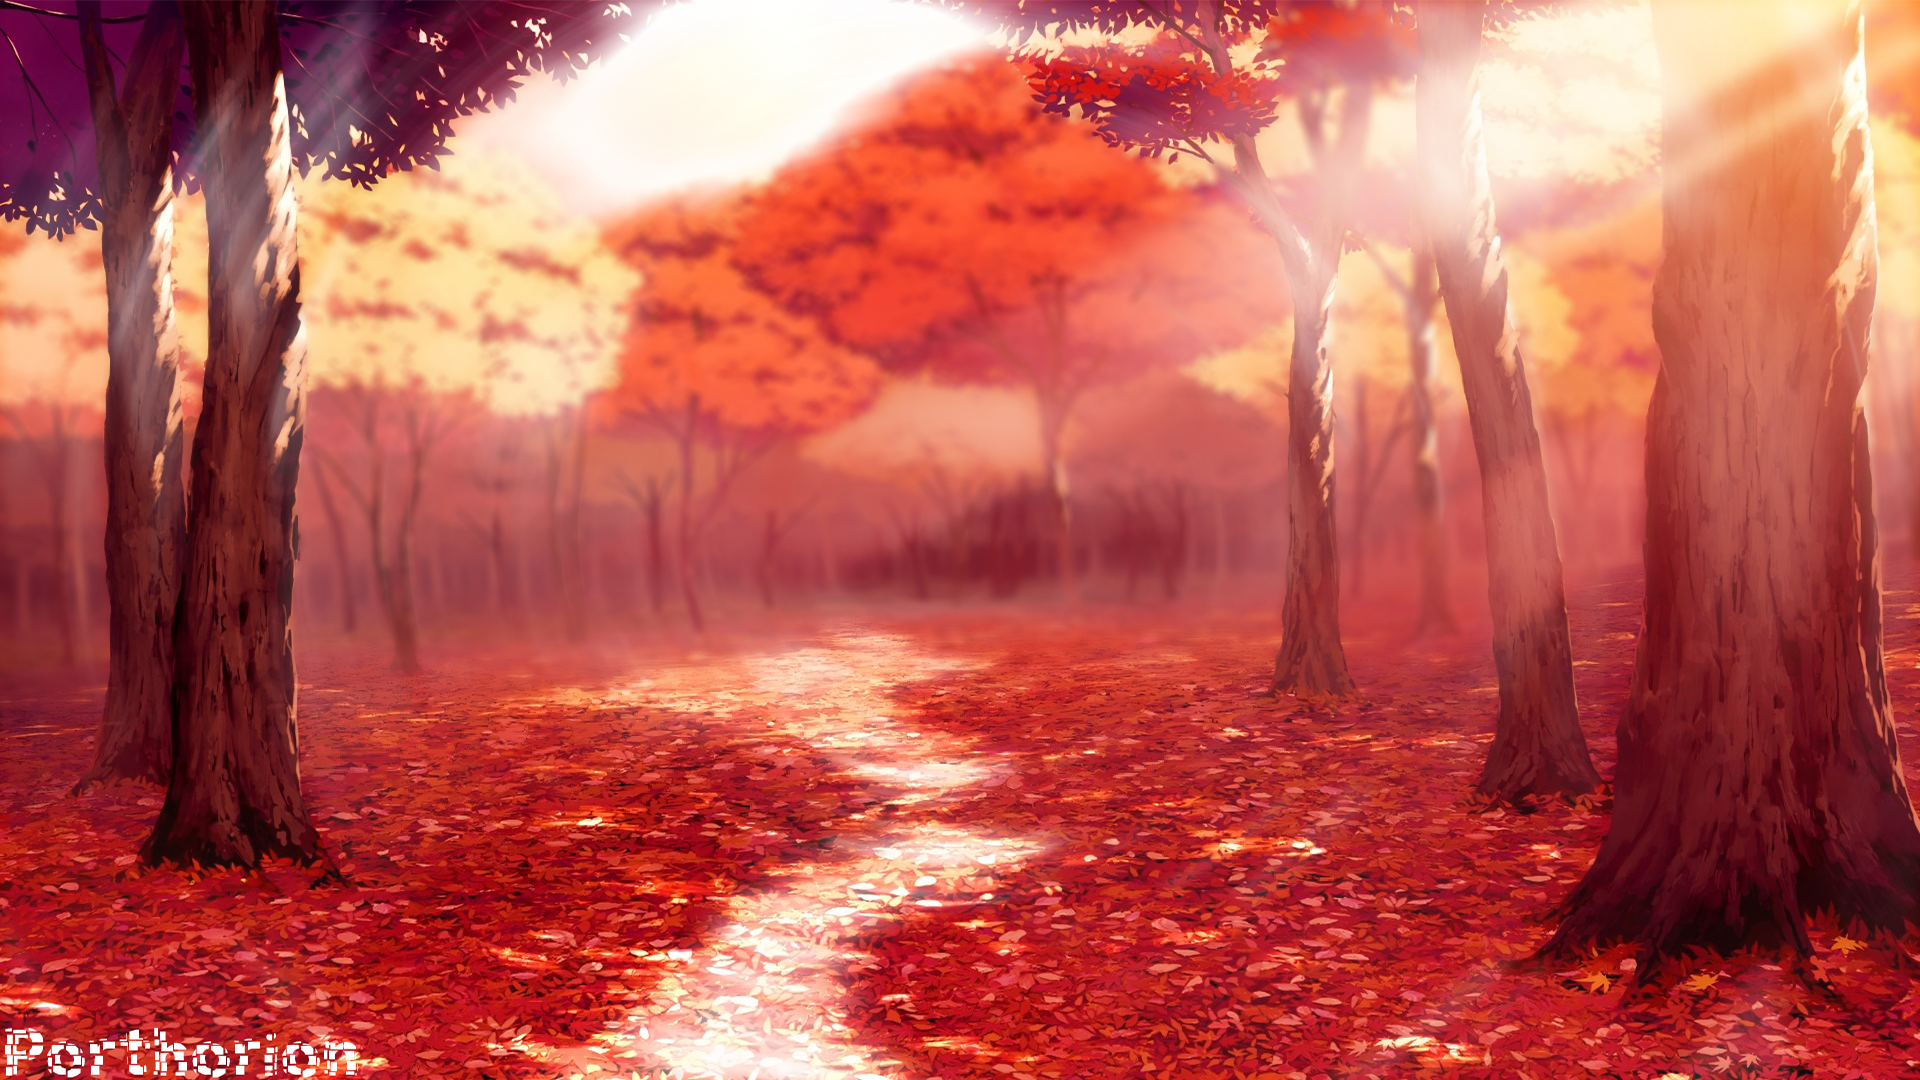 Fall / Autemn Season Anime Style - Wallpaper by porthorion on DeviantArt